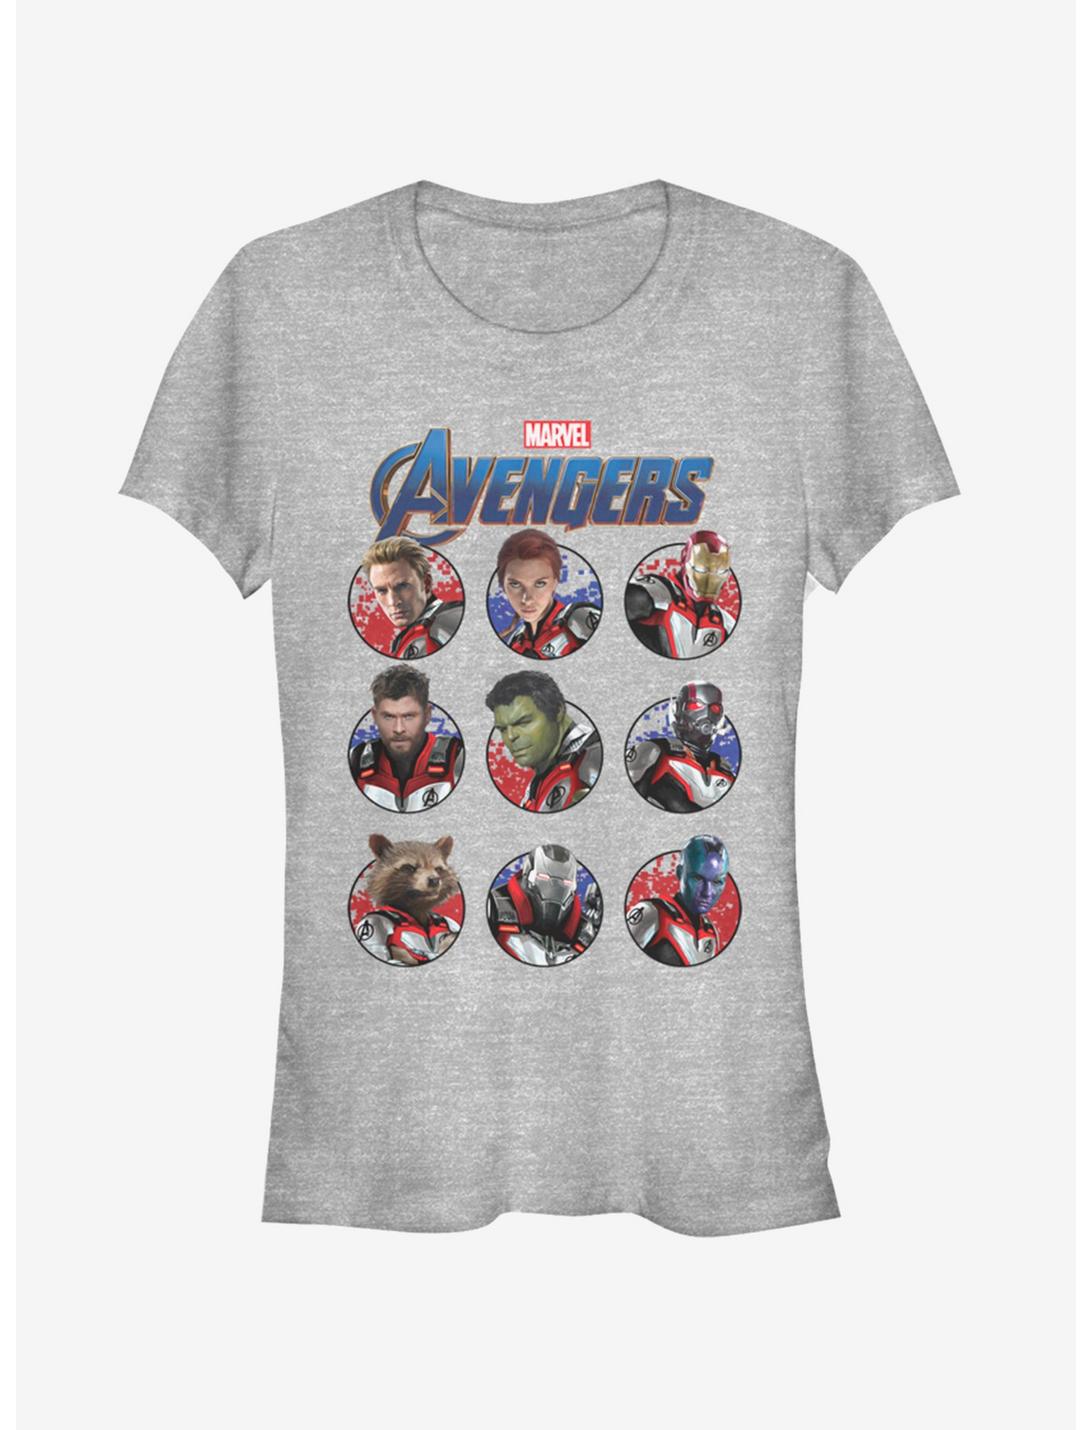 Marvel Avengers: Endgame Heroic Group Girls Heathered T-Shirt, ATH HTR, hi-res